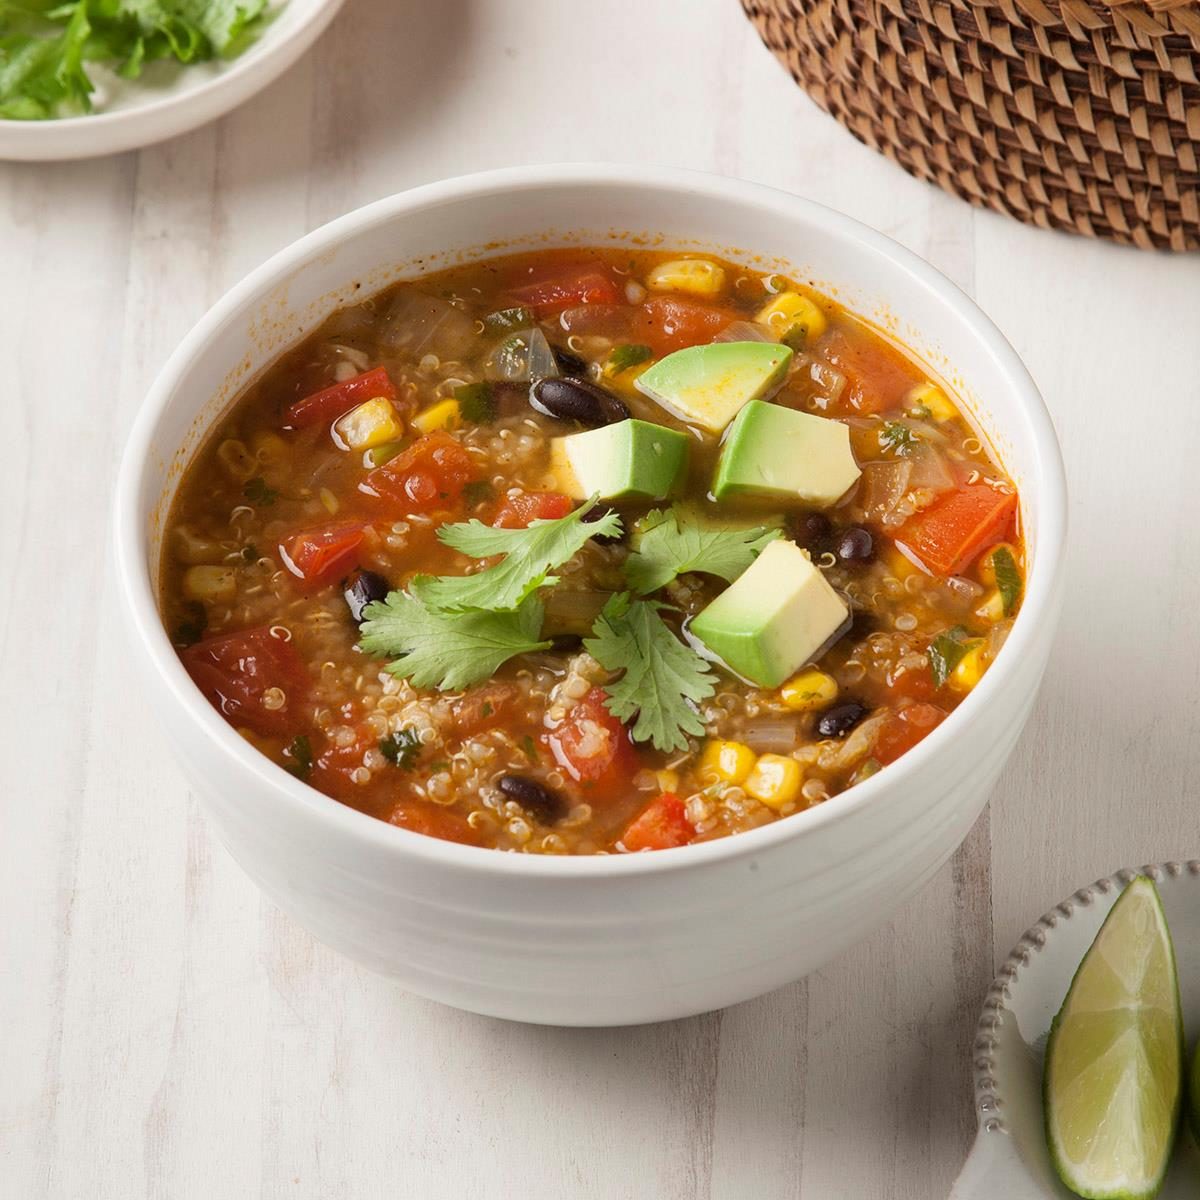 Vegan Tortilla Soup Recipe: How to Make It